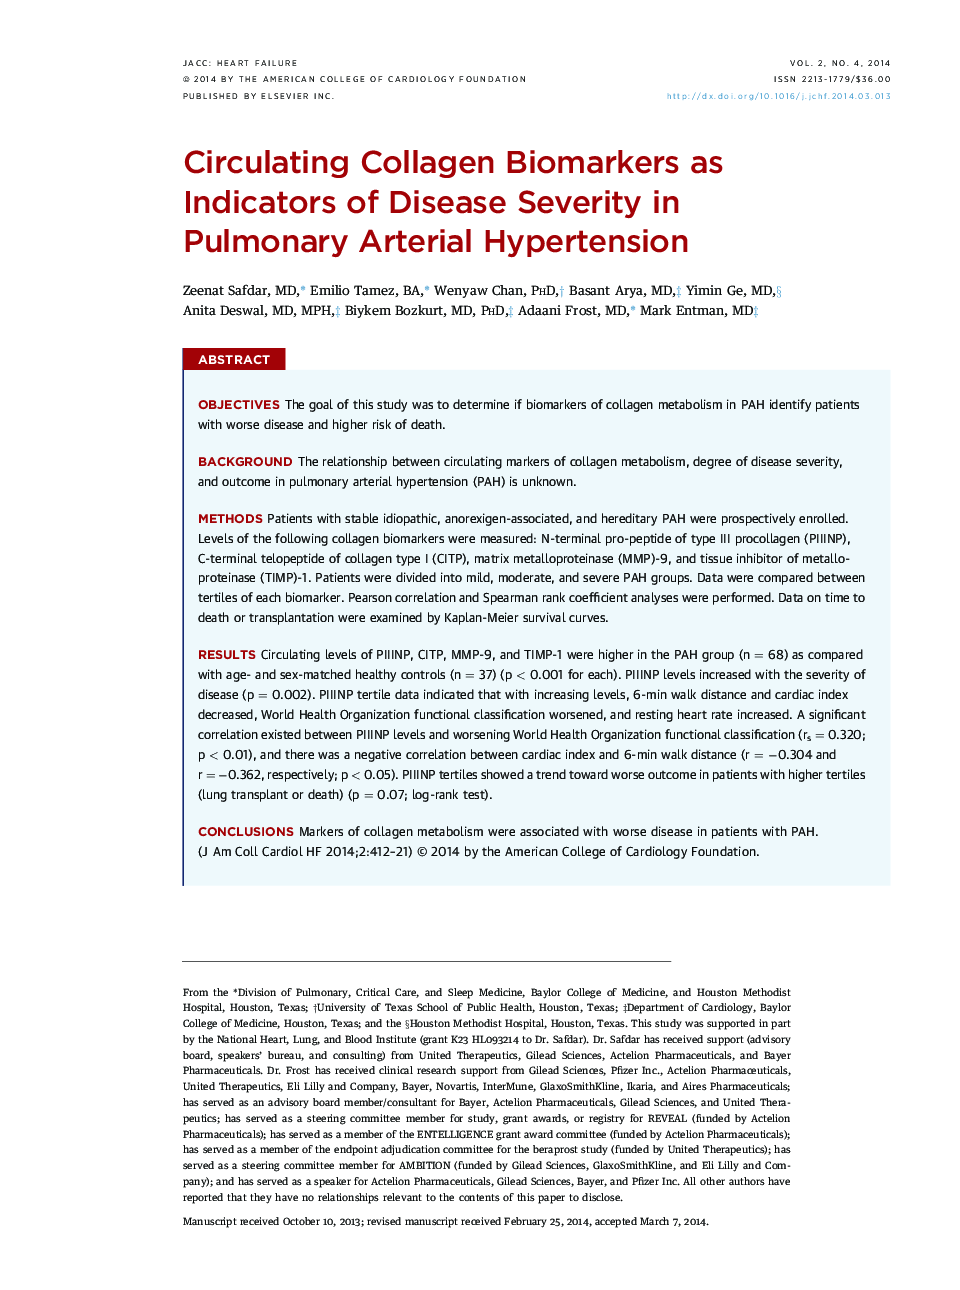 Circulating Collagen Biomarkers as Indicators of Disease Severity in Pulmonary Arterial Hypertension 